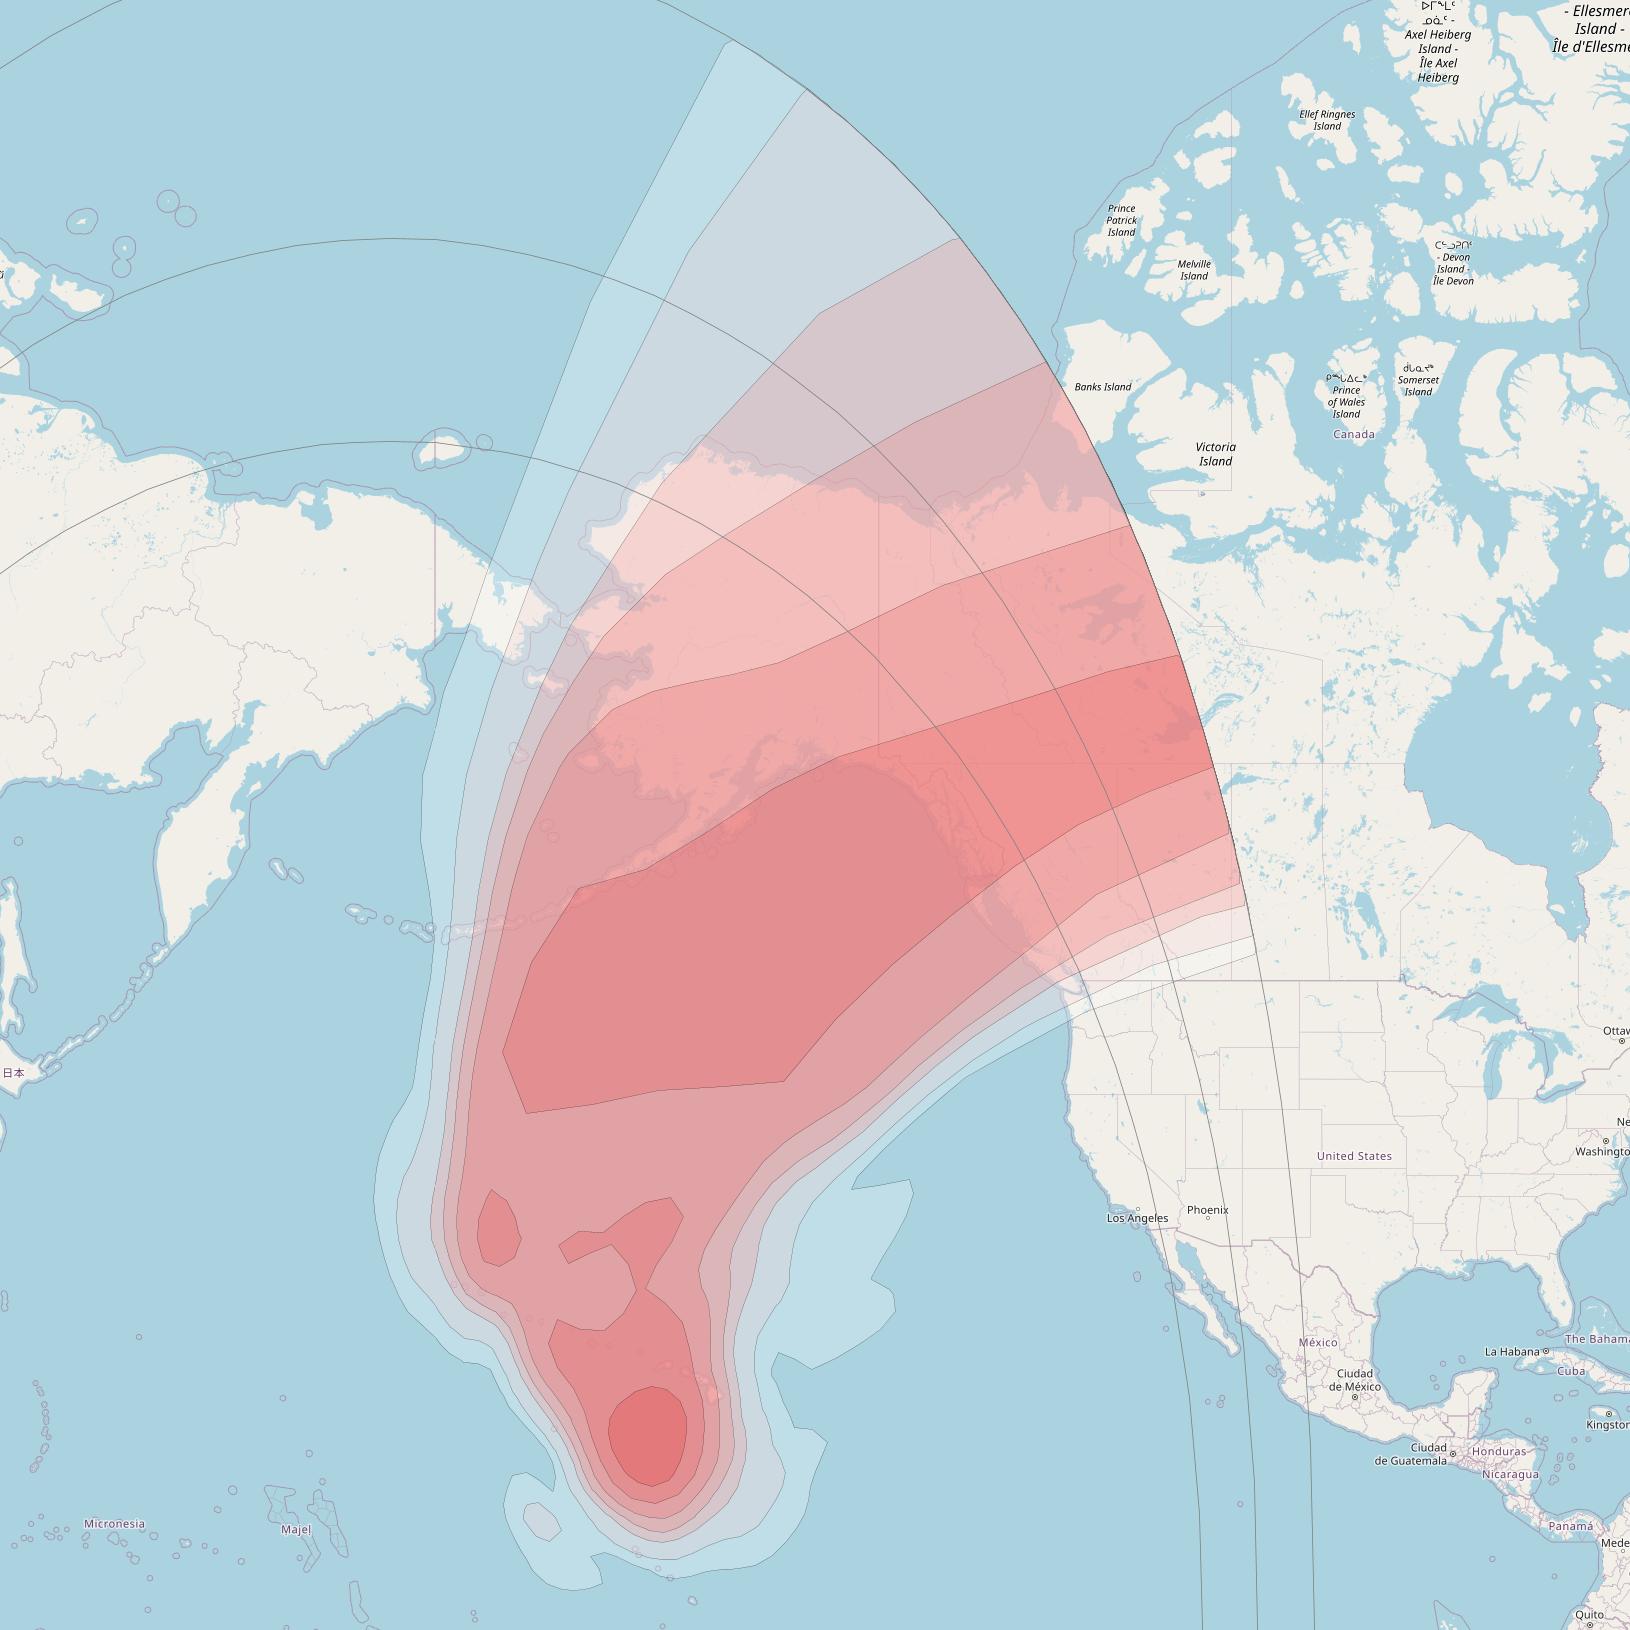 NSS 11 at 176° E downlink Ku-band NET (Hawaii, Alaska, Canada, Northwestern USA) coverage map